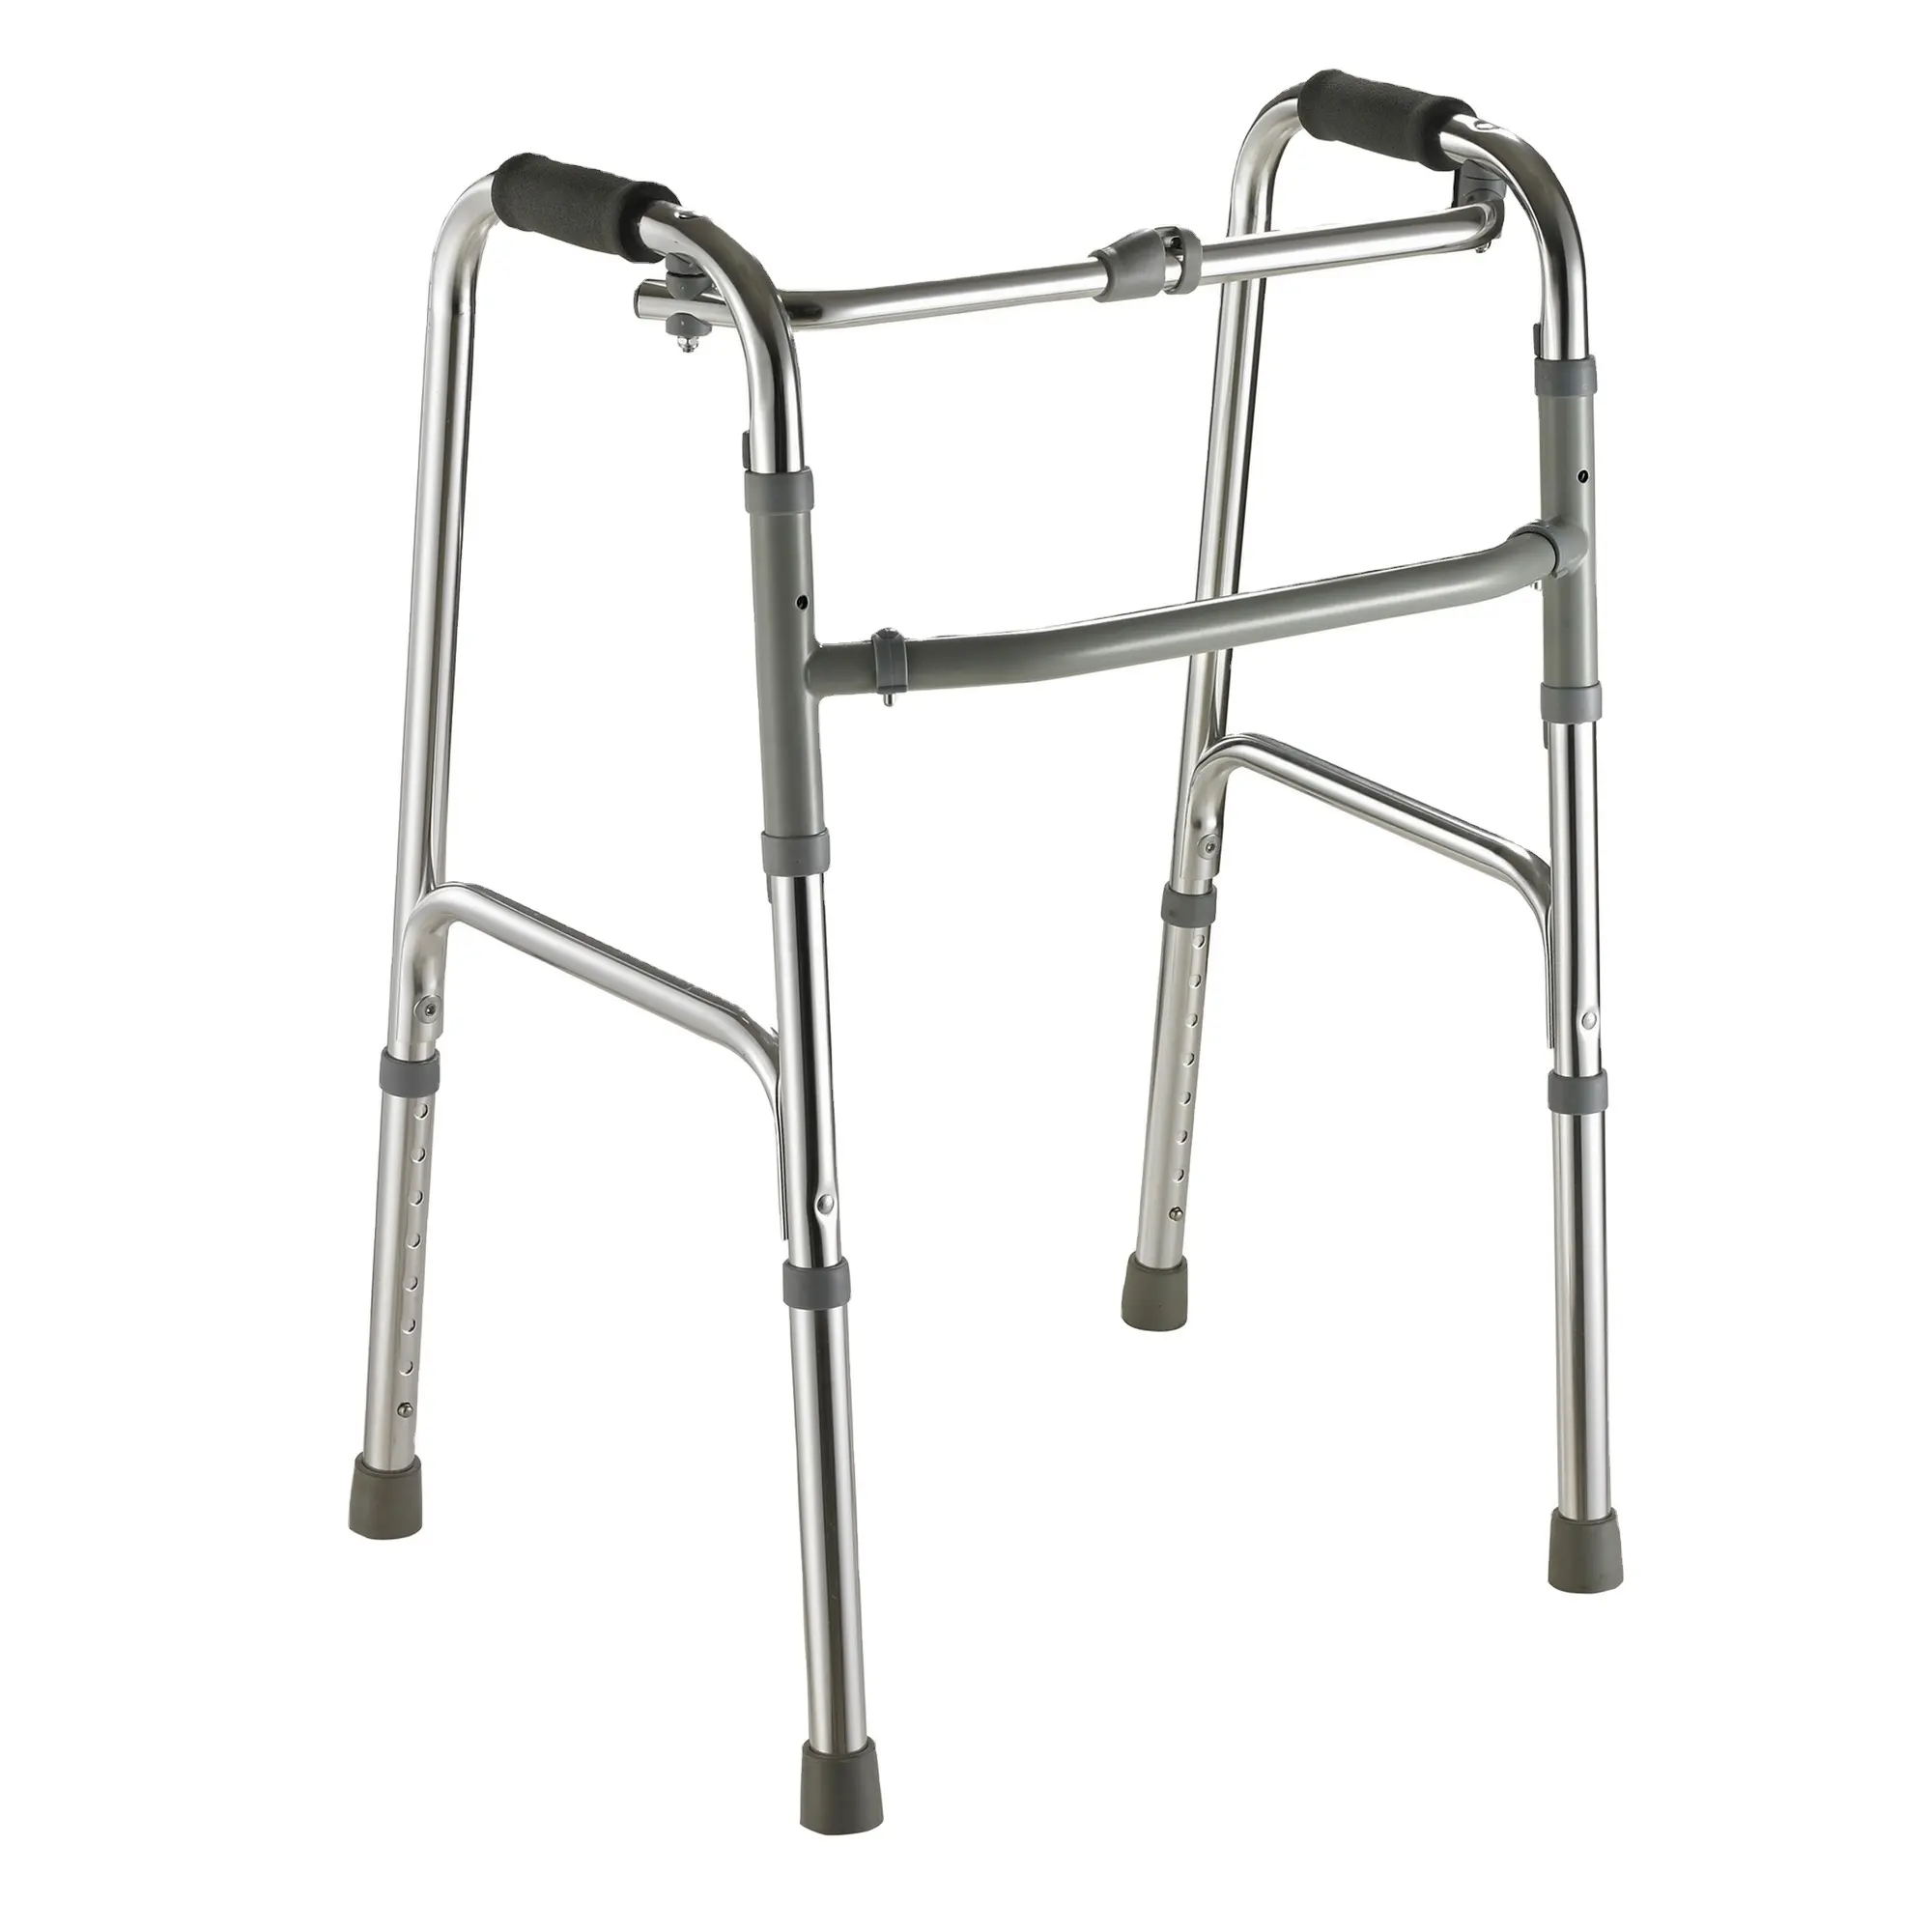 Gran oferta, andador plegable ligero de aleación de aluminio para personas discapacitadas, andador Rollator para adultos